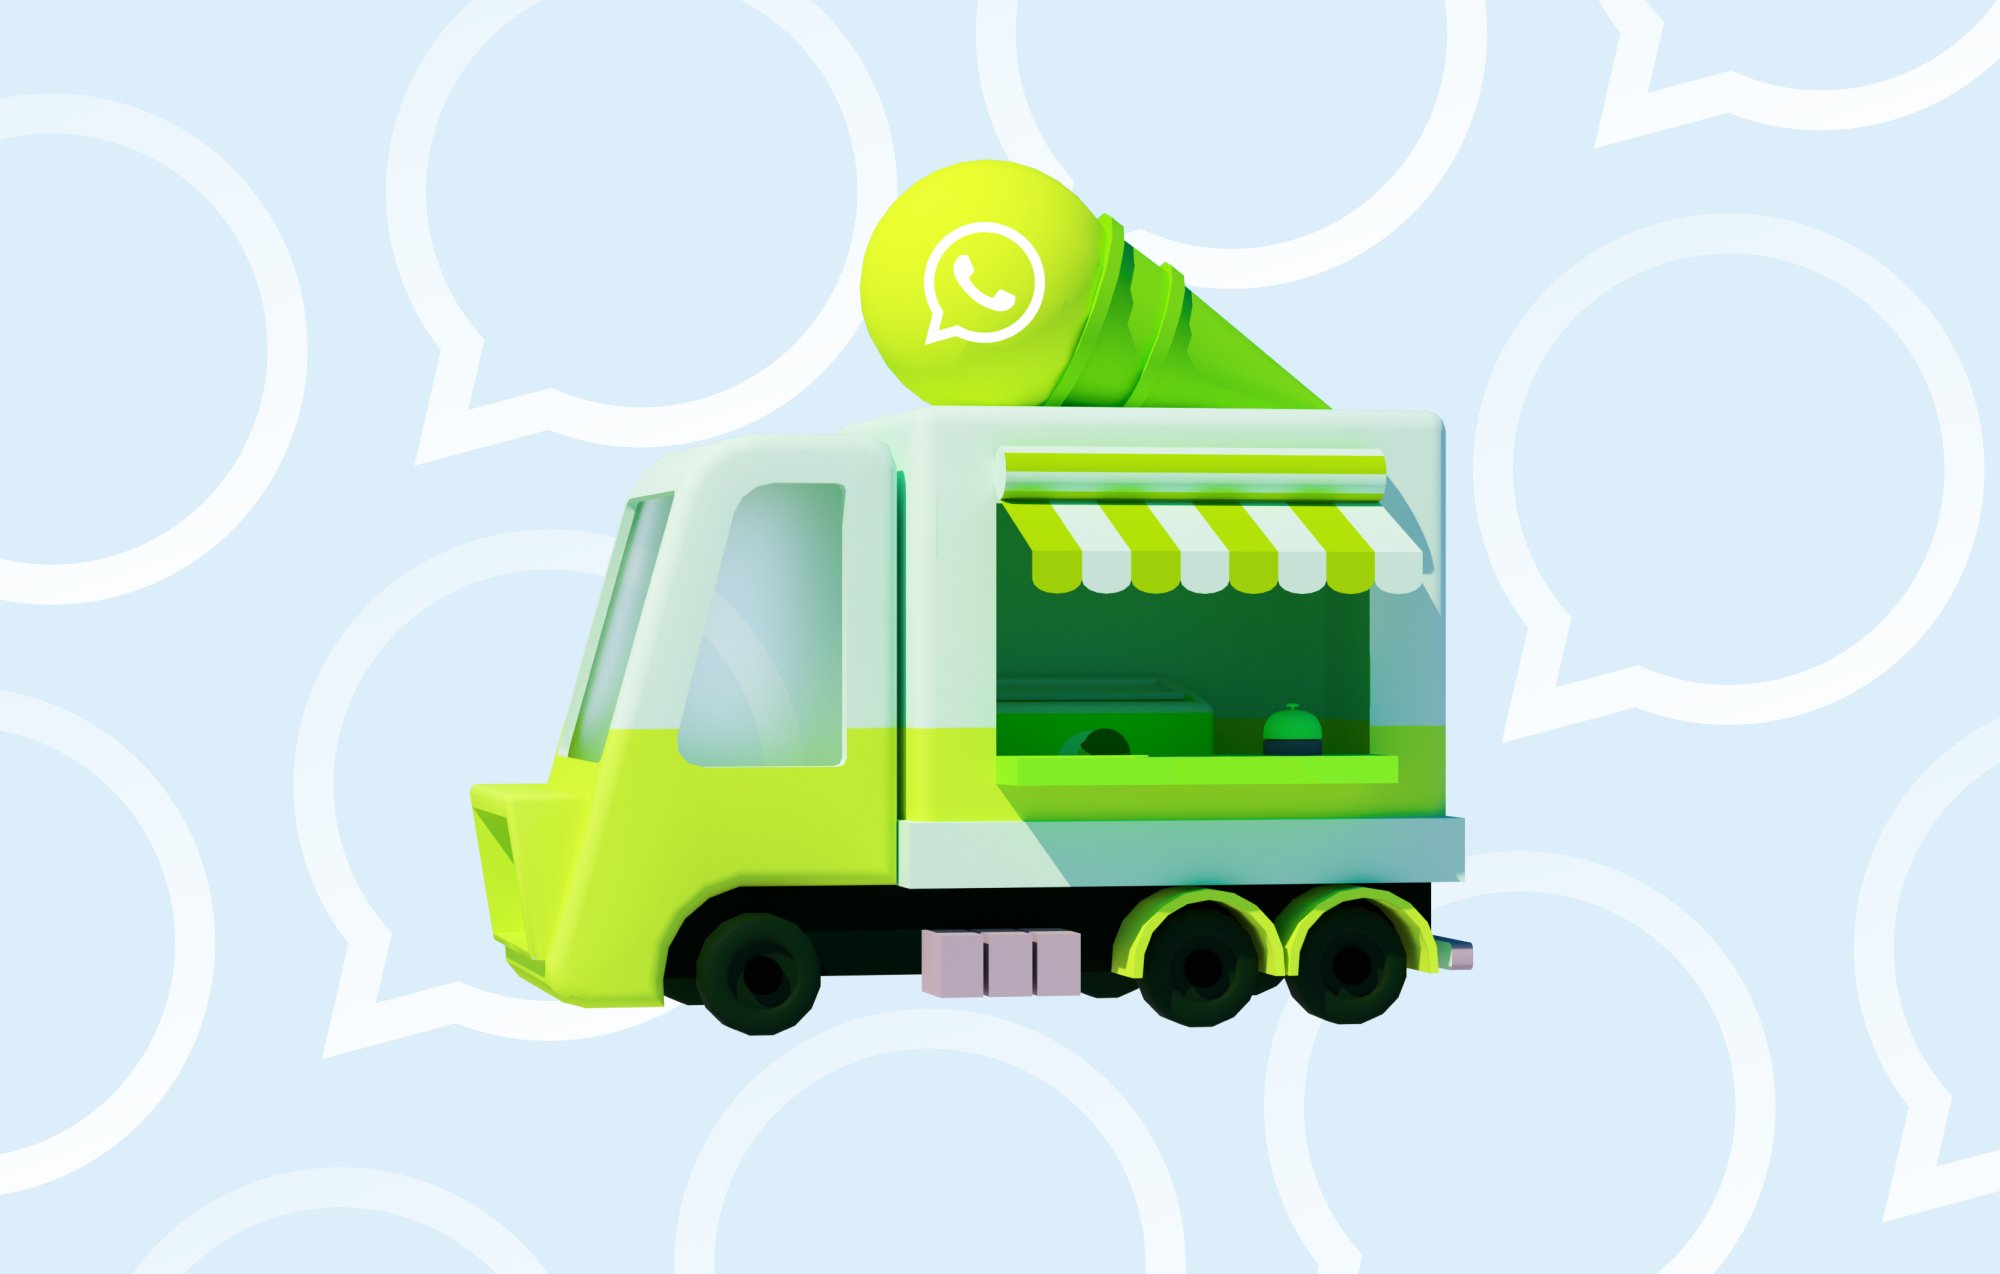 Cute green ice-cream truck wth WhatsApp logo for charles blog post about WhatsApp marketing agencies